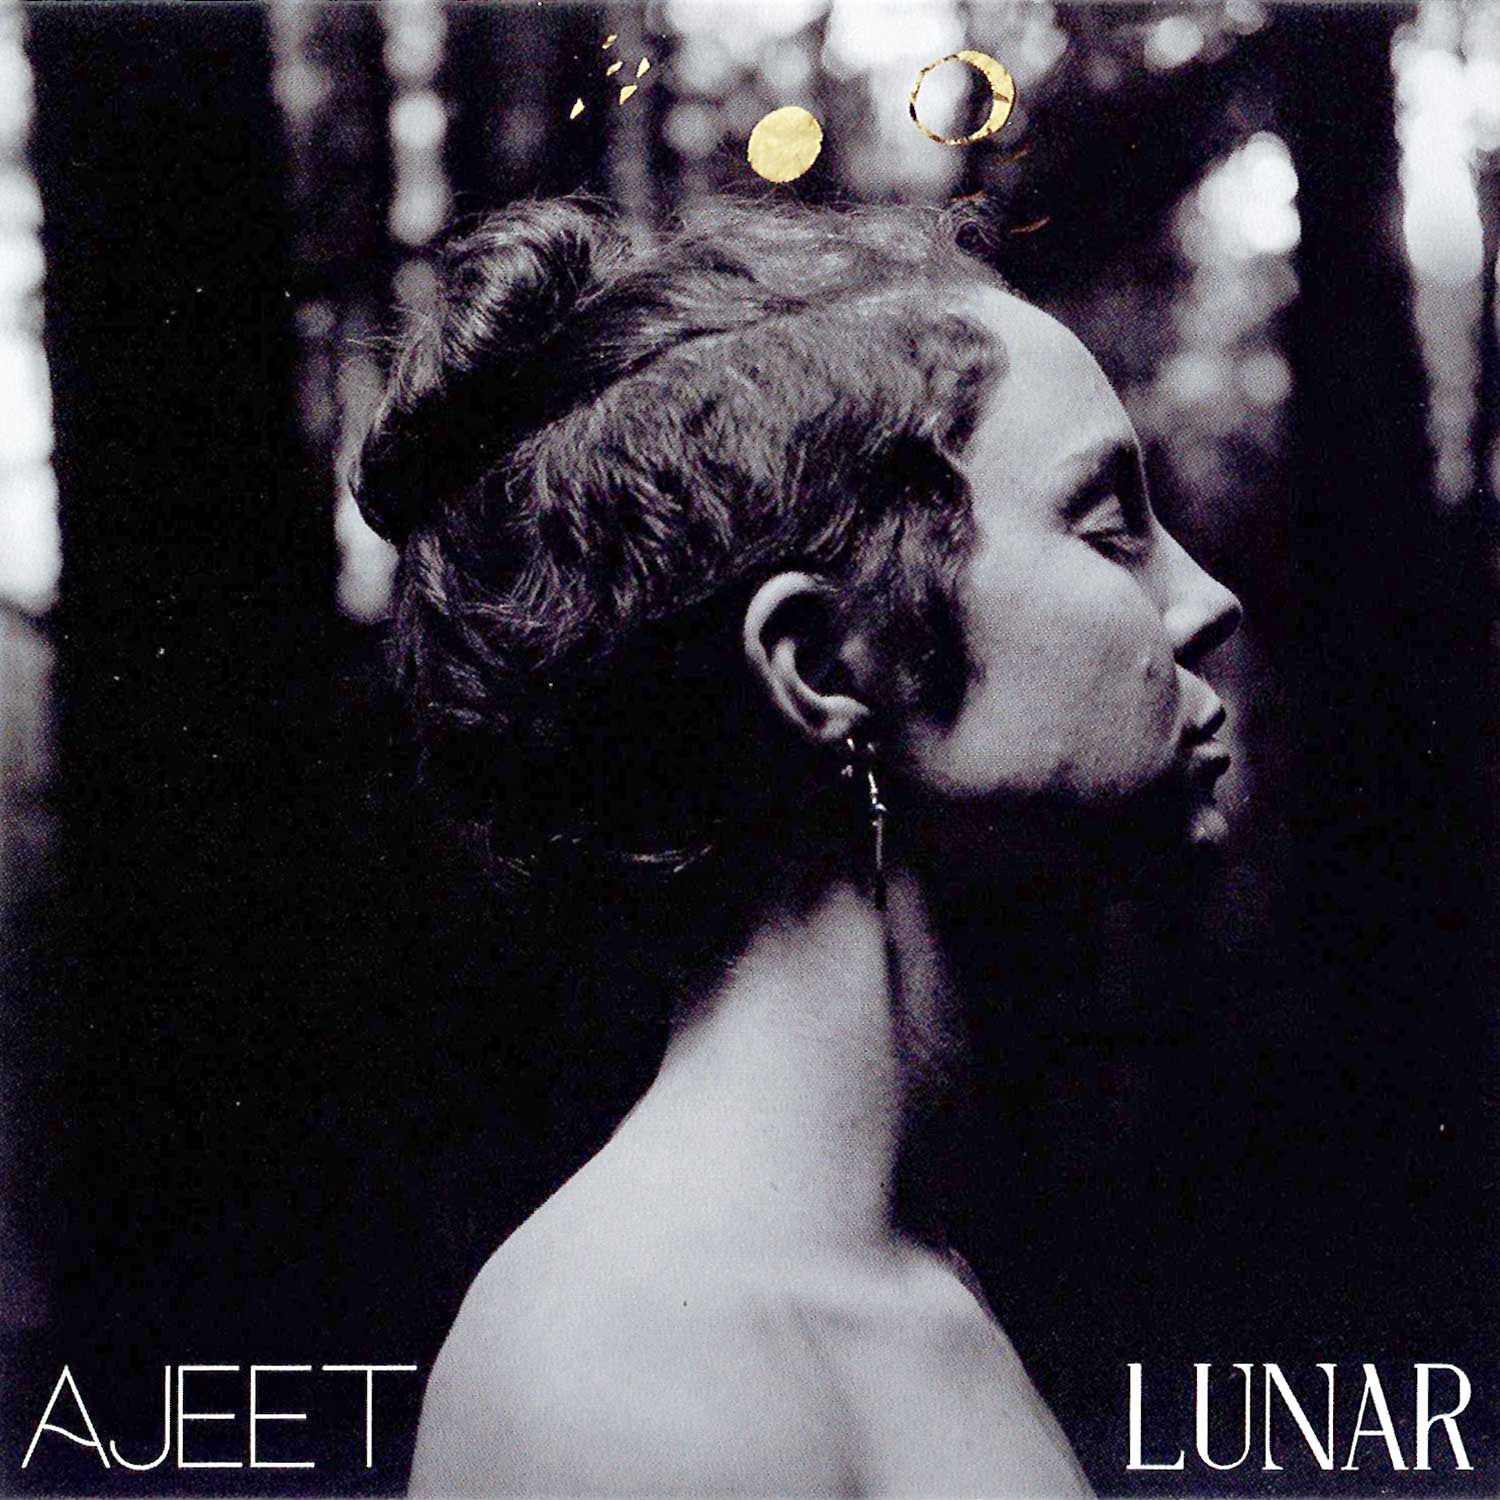 Lunar - Ajeet Kaur complete